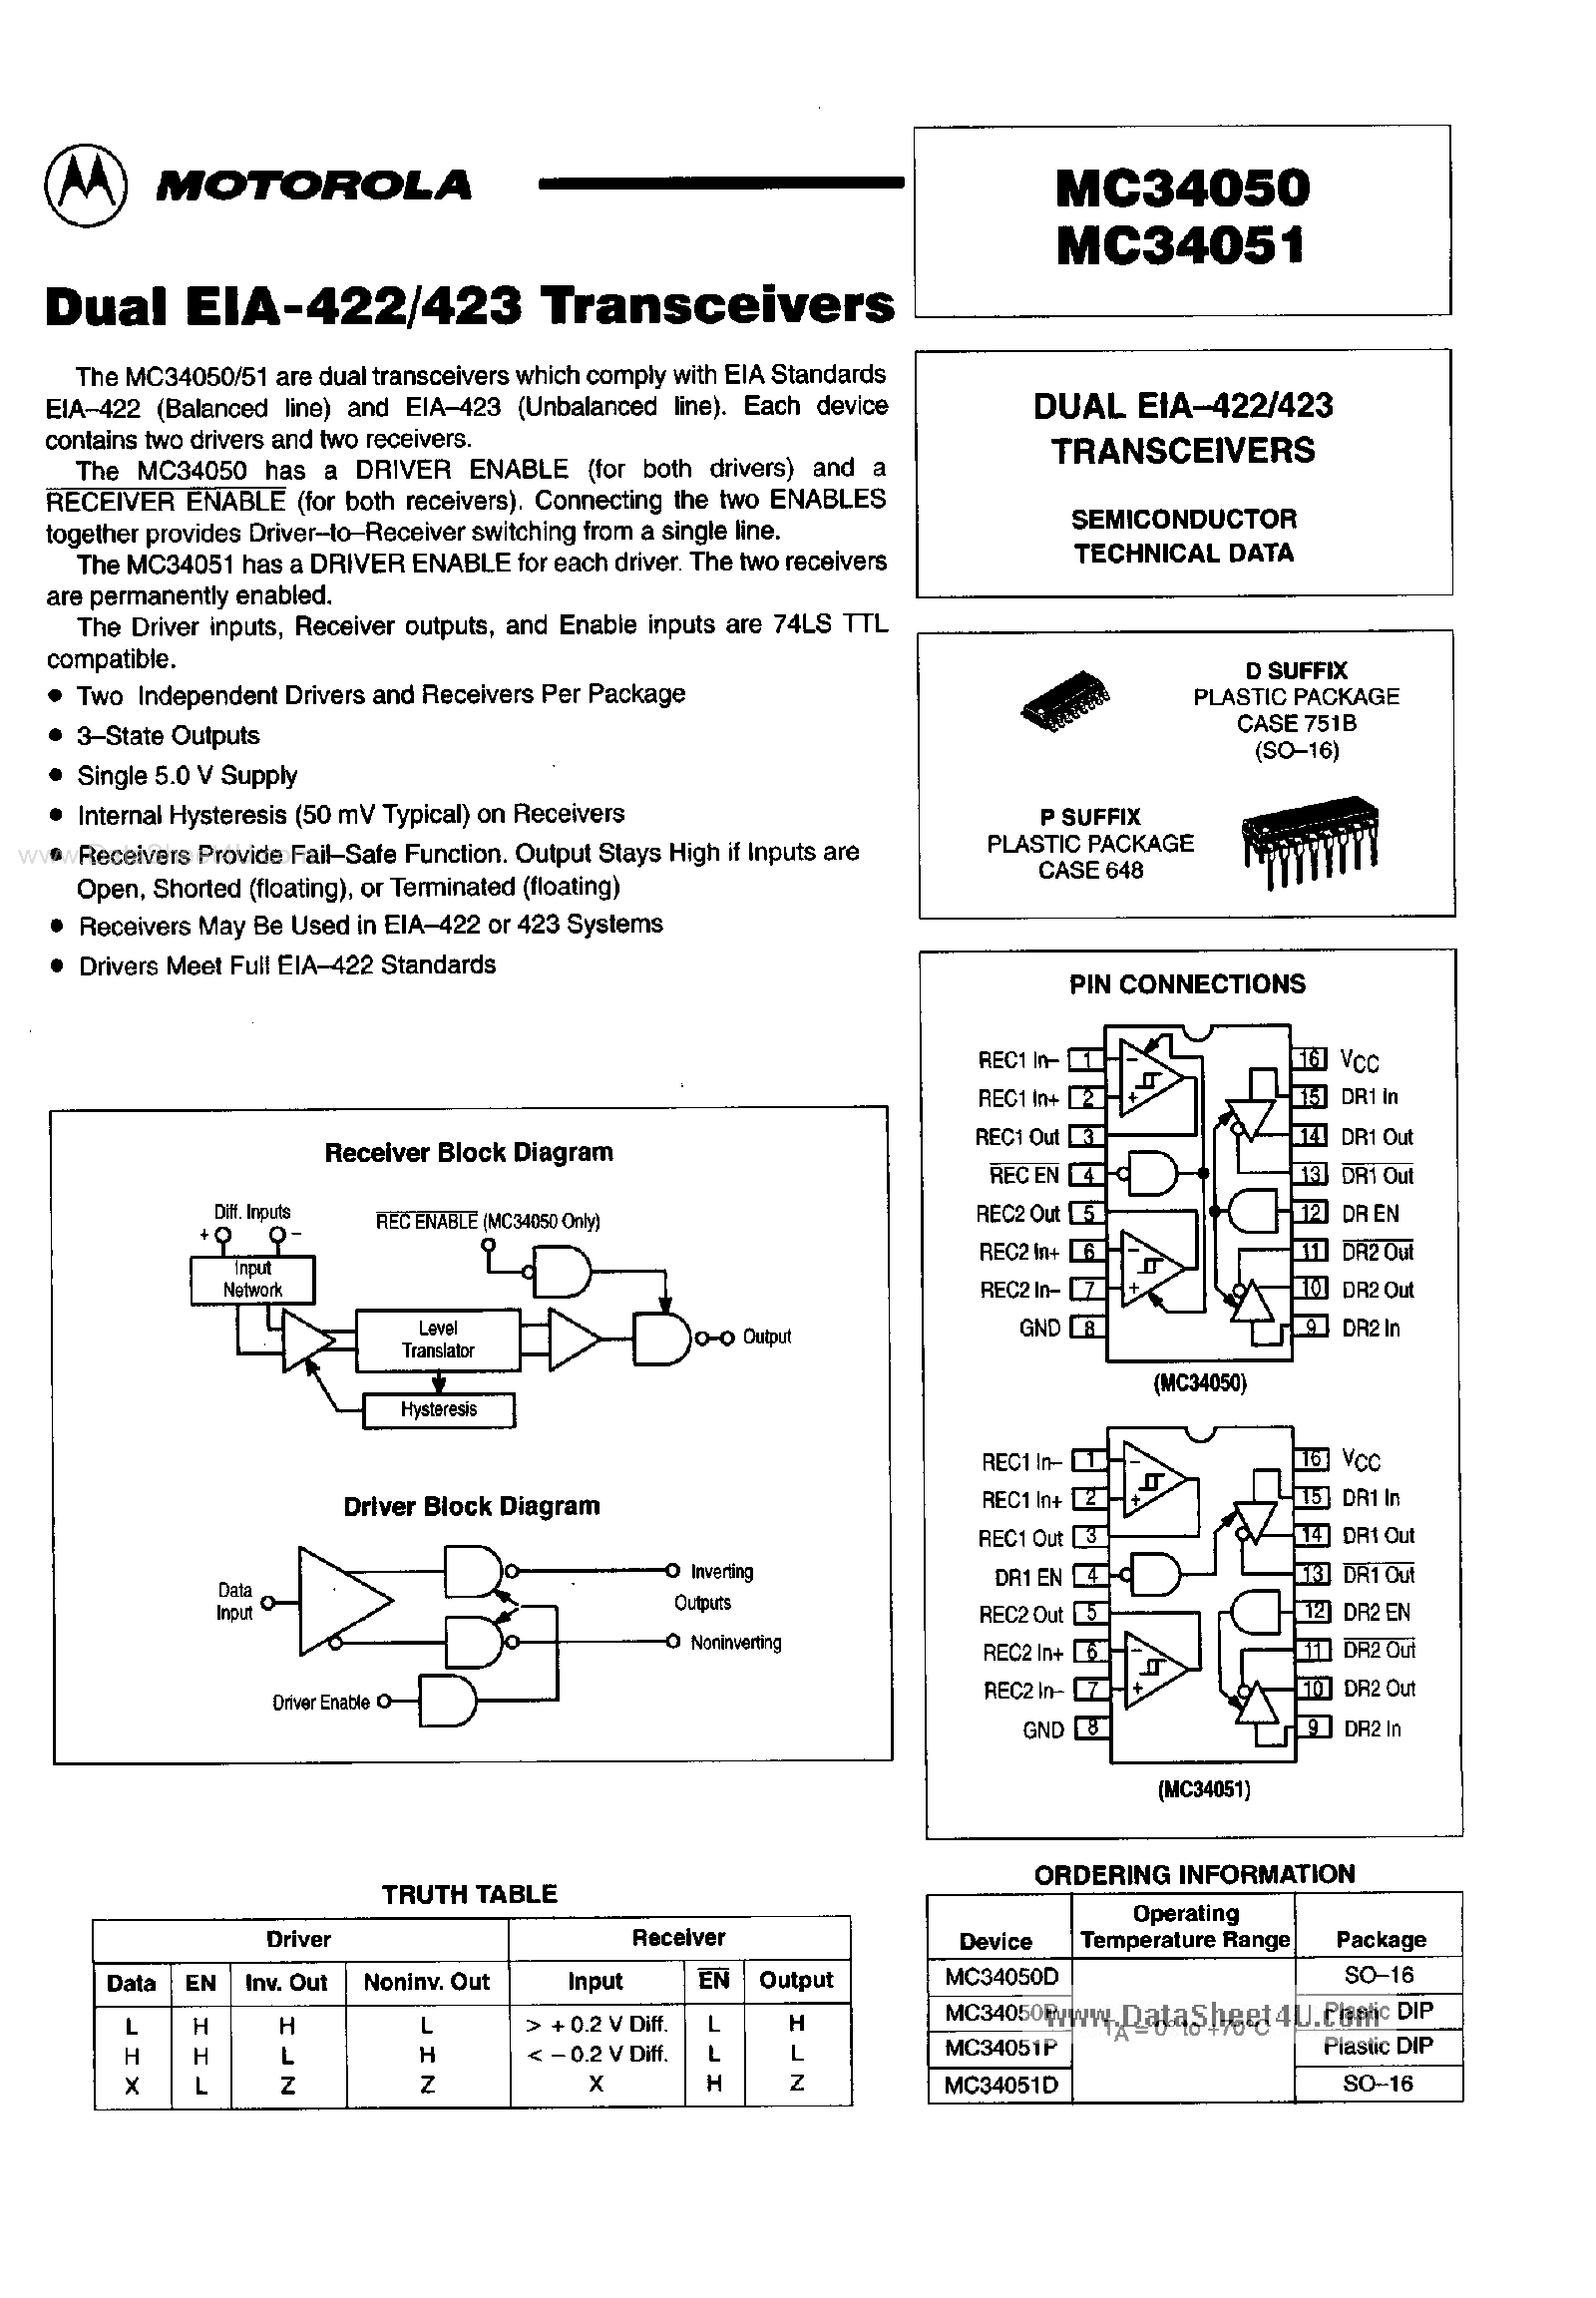 Datasheet MC34050 - (MC34050 / MC34051) Dual ELA-422/423 Transceivers page 1